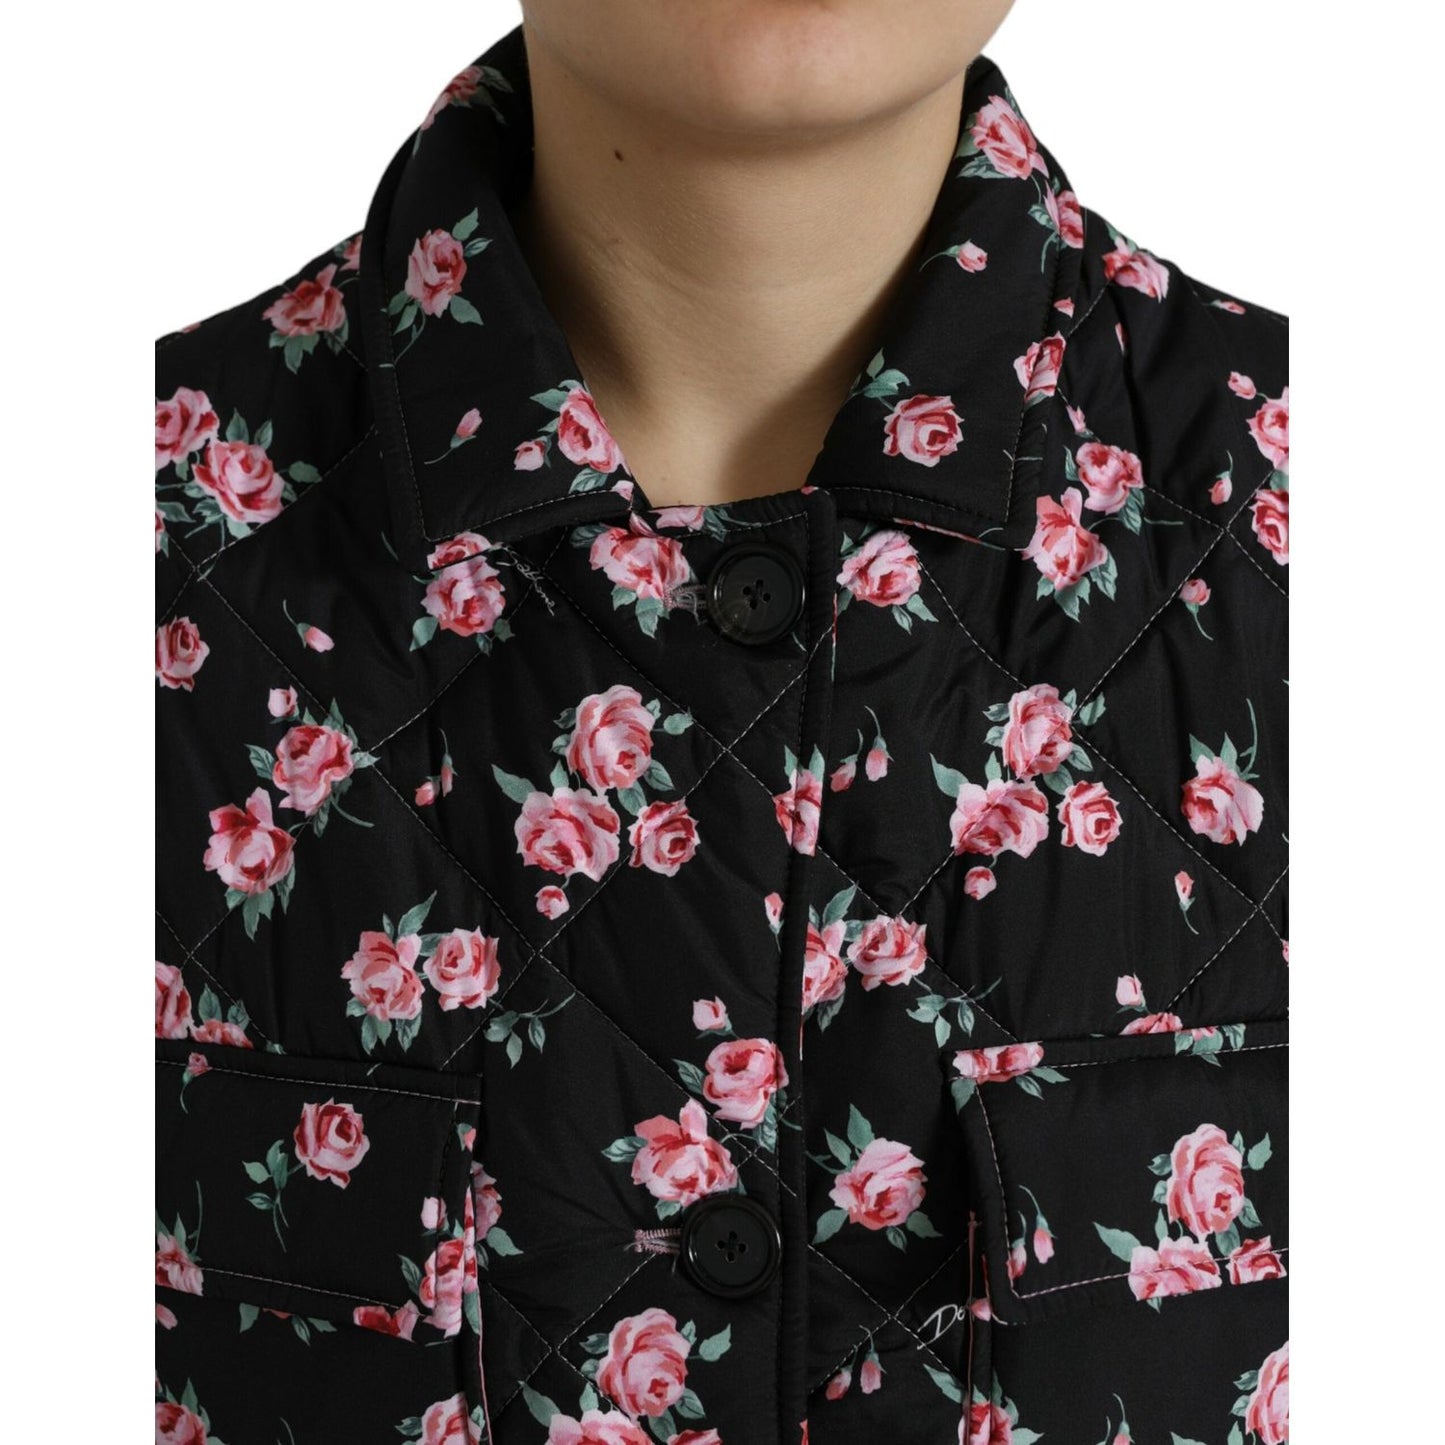 Dolce & Gabbana Elegant Floral Print Trench Coat Jacket black-floral-collared-trench-coat-jacket